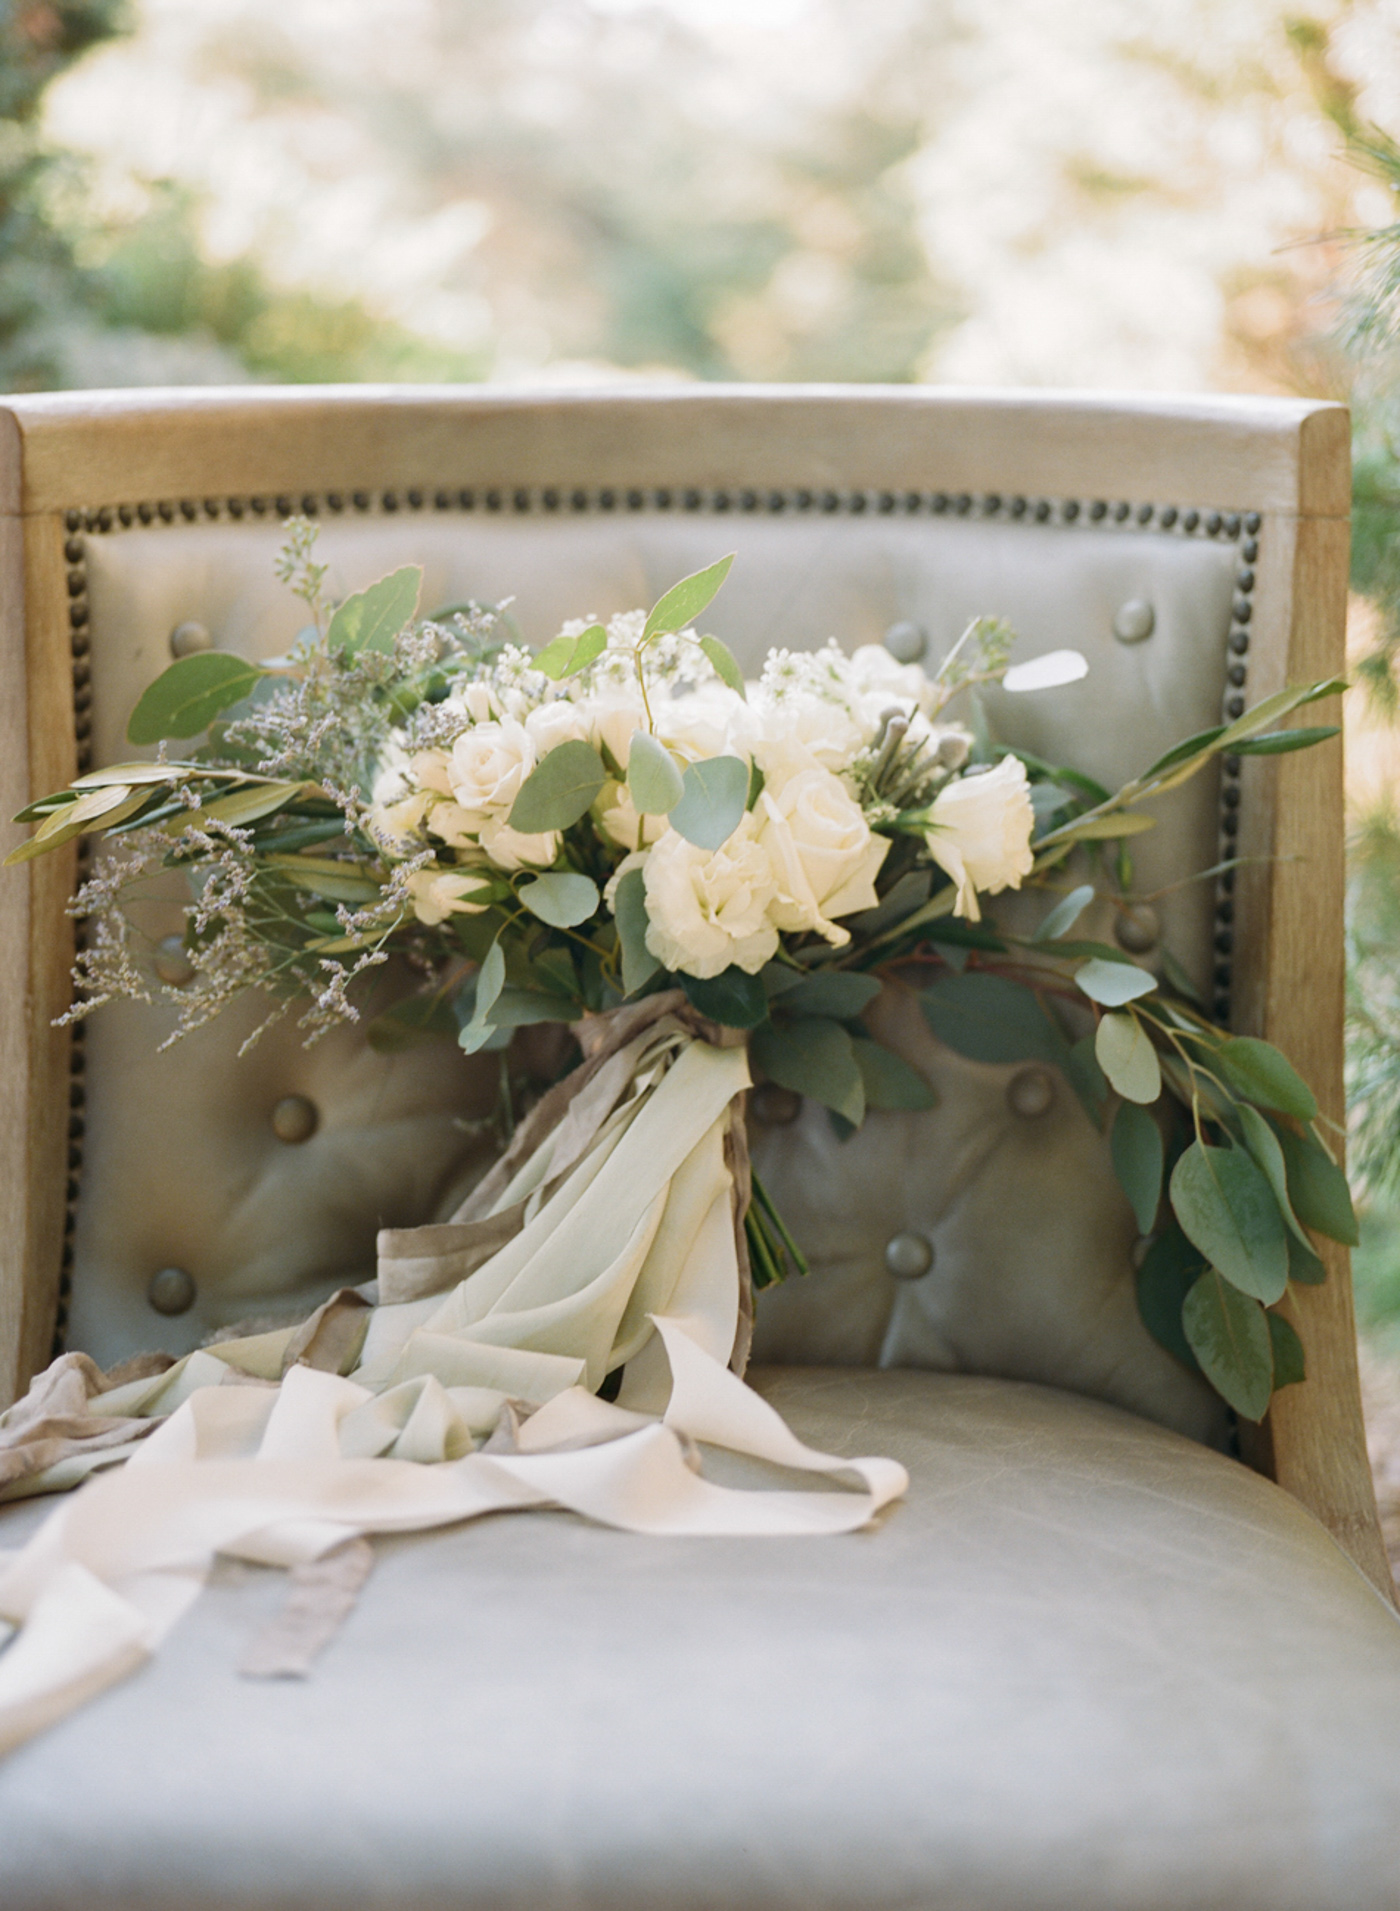 Cheekwood floral arrangements,
Koby Brown Photography, Tennessee Wedding Photographer, Rachel and Johnny, Nashville Wedding At Cheekwood